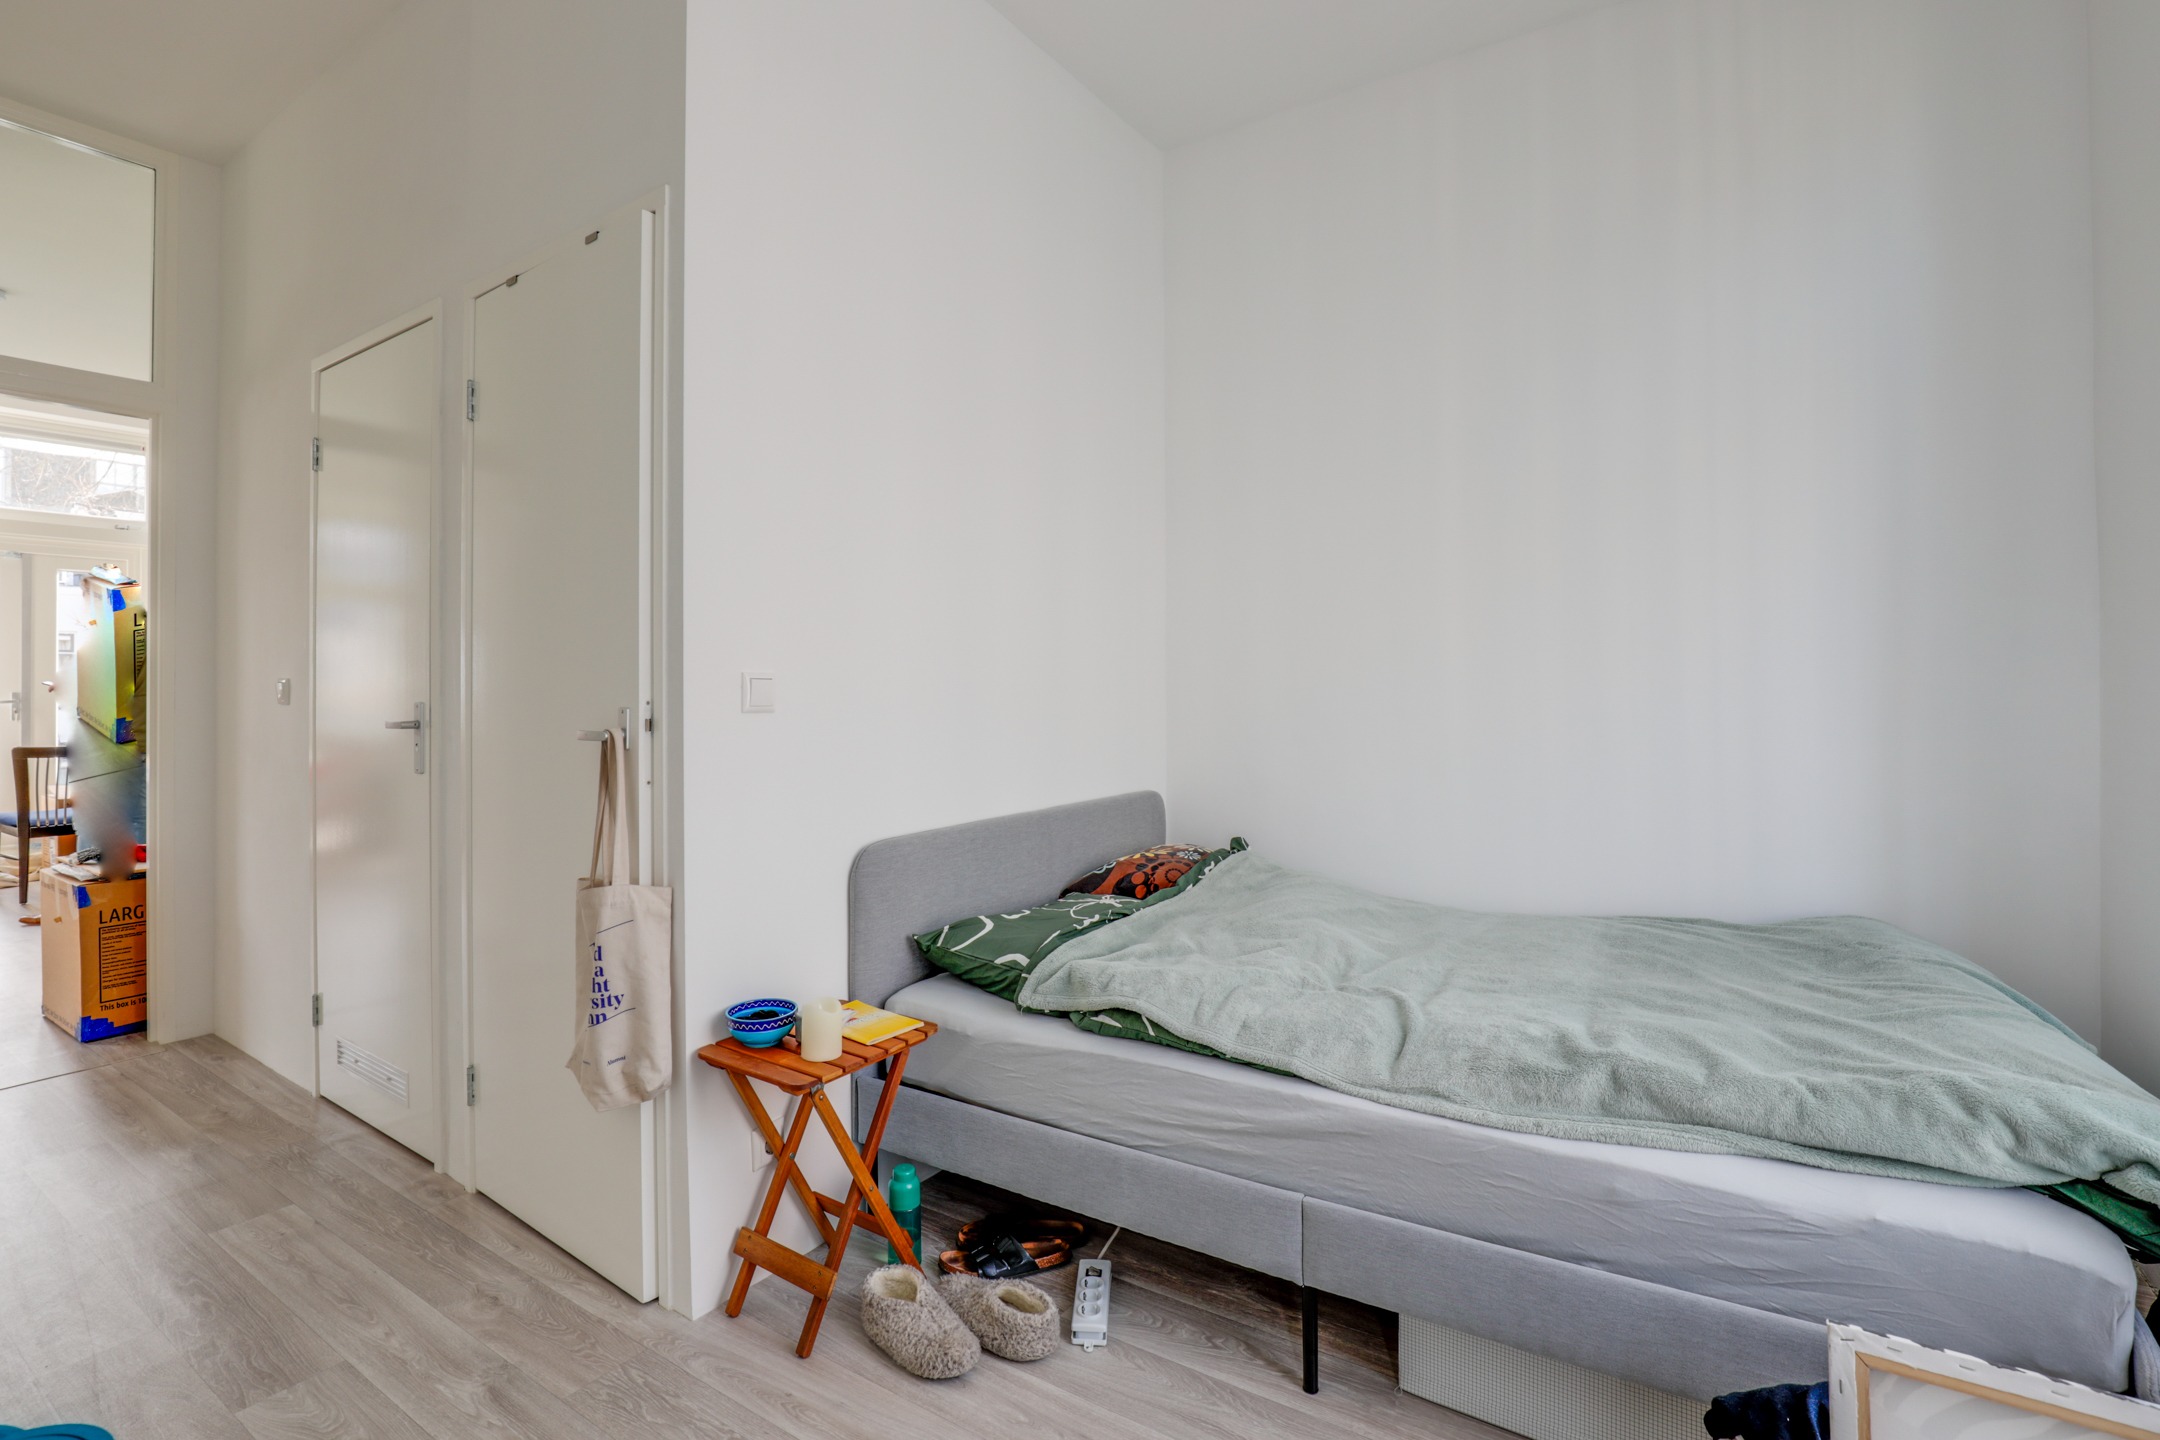 Woning / appartement - Utrecht - Sumatrastraat 12 A